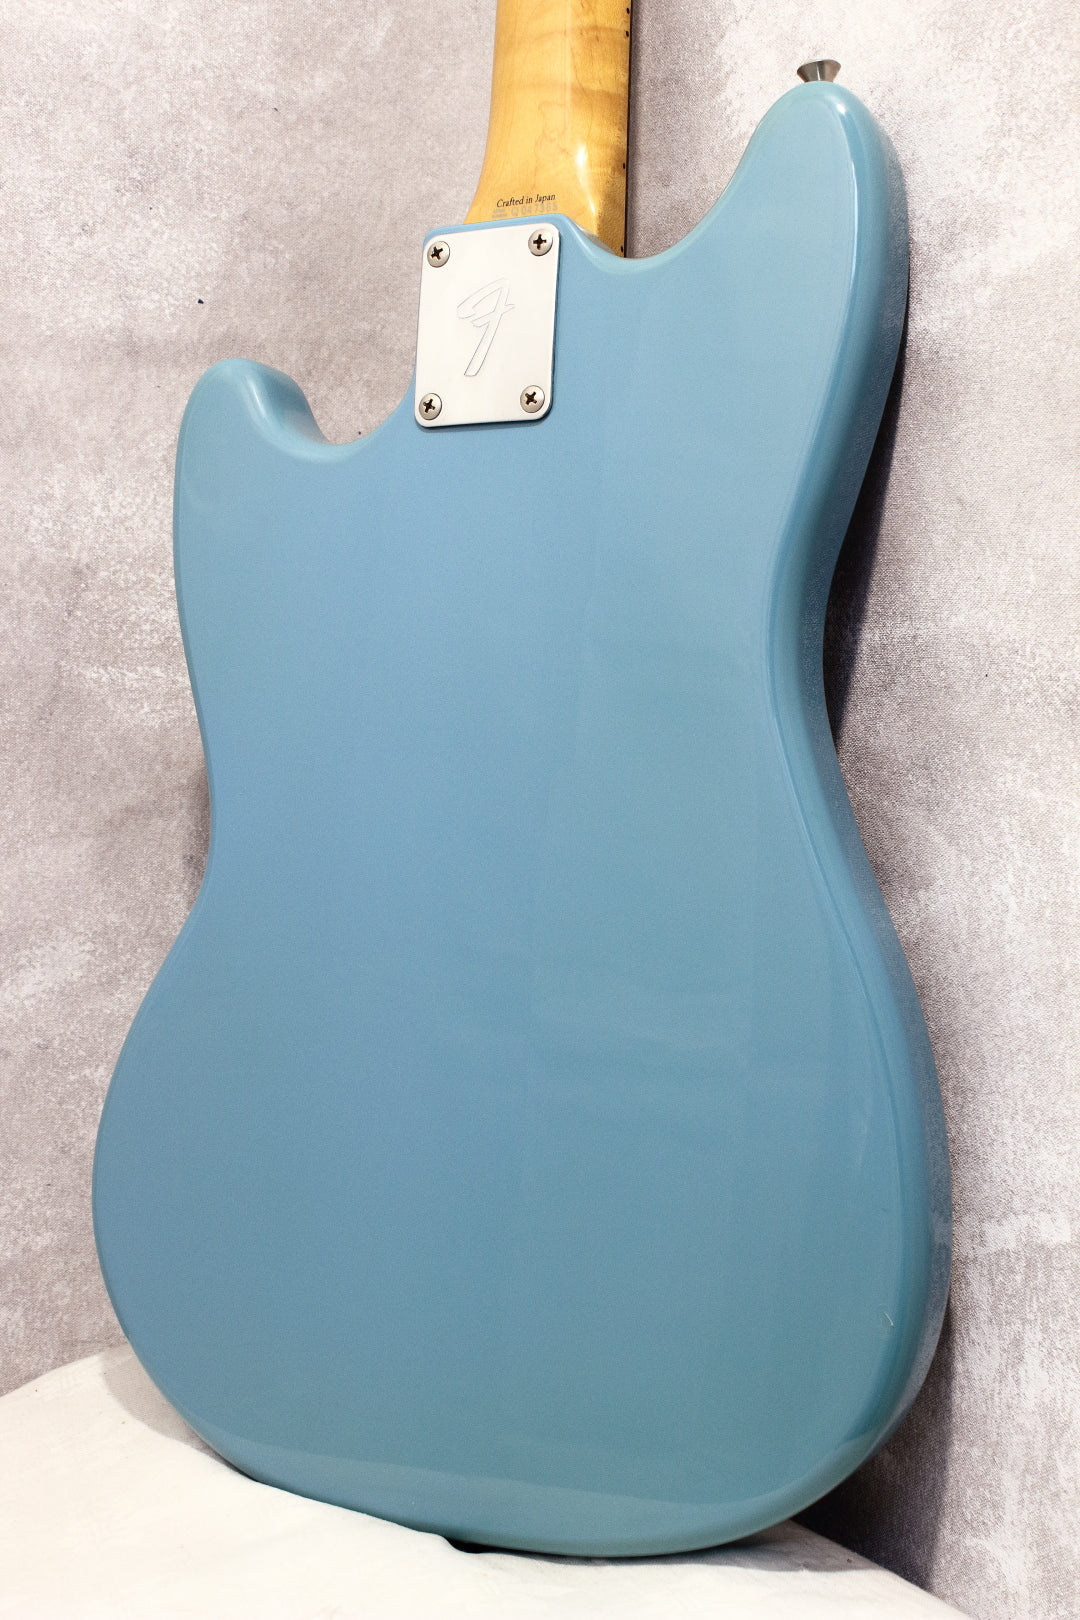 Fender Japan '66 Mustang MG66-66 California Blue 2003